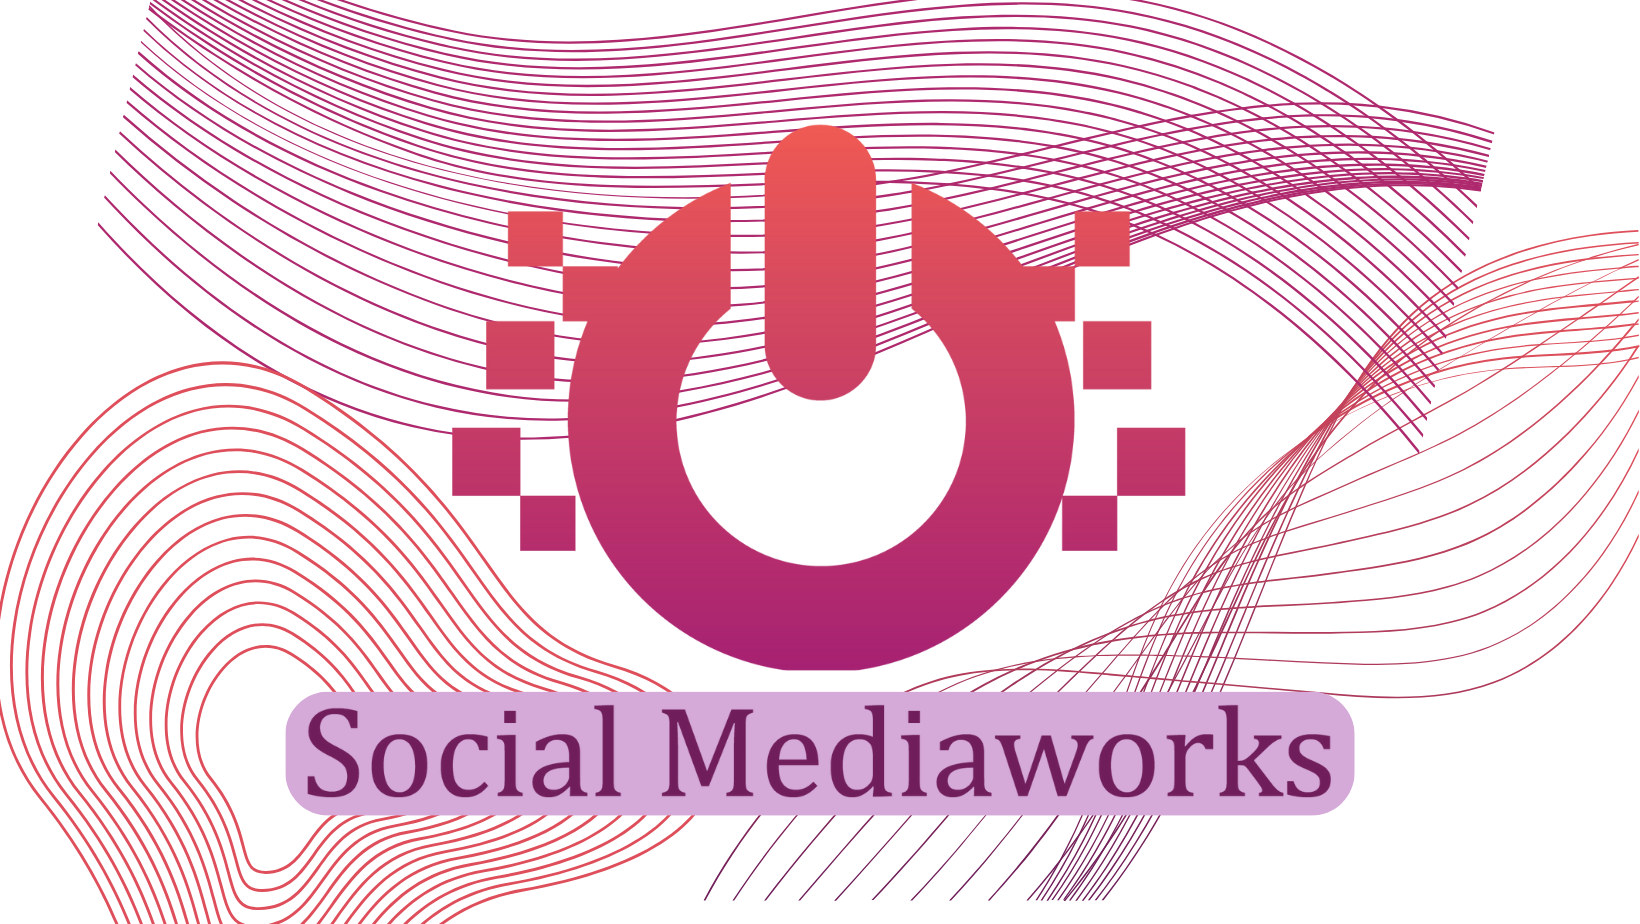 Social Mediaworks Marketing